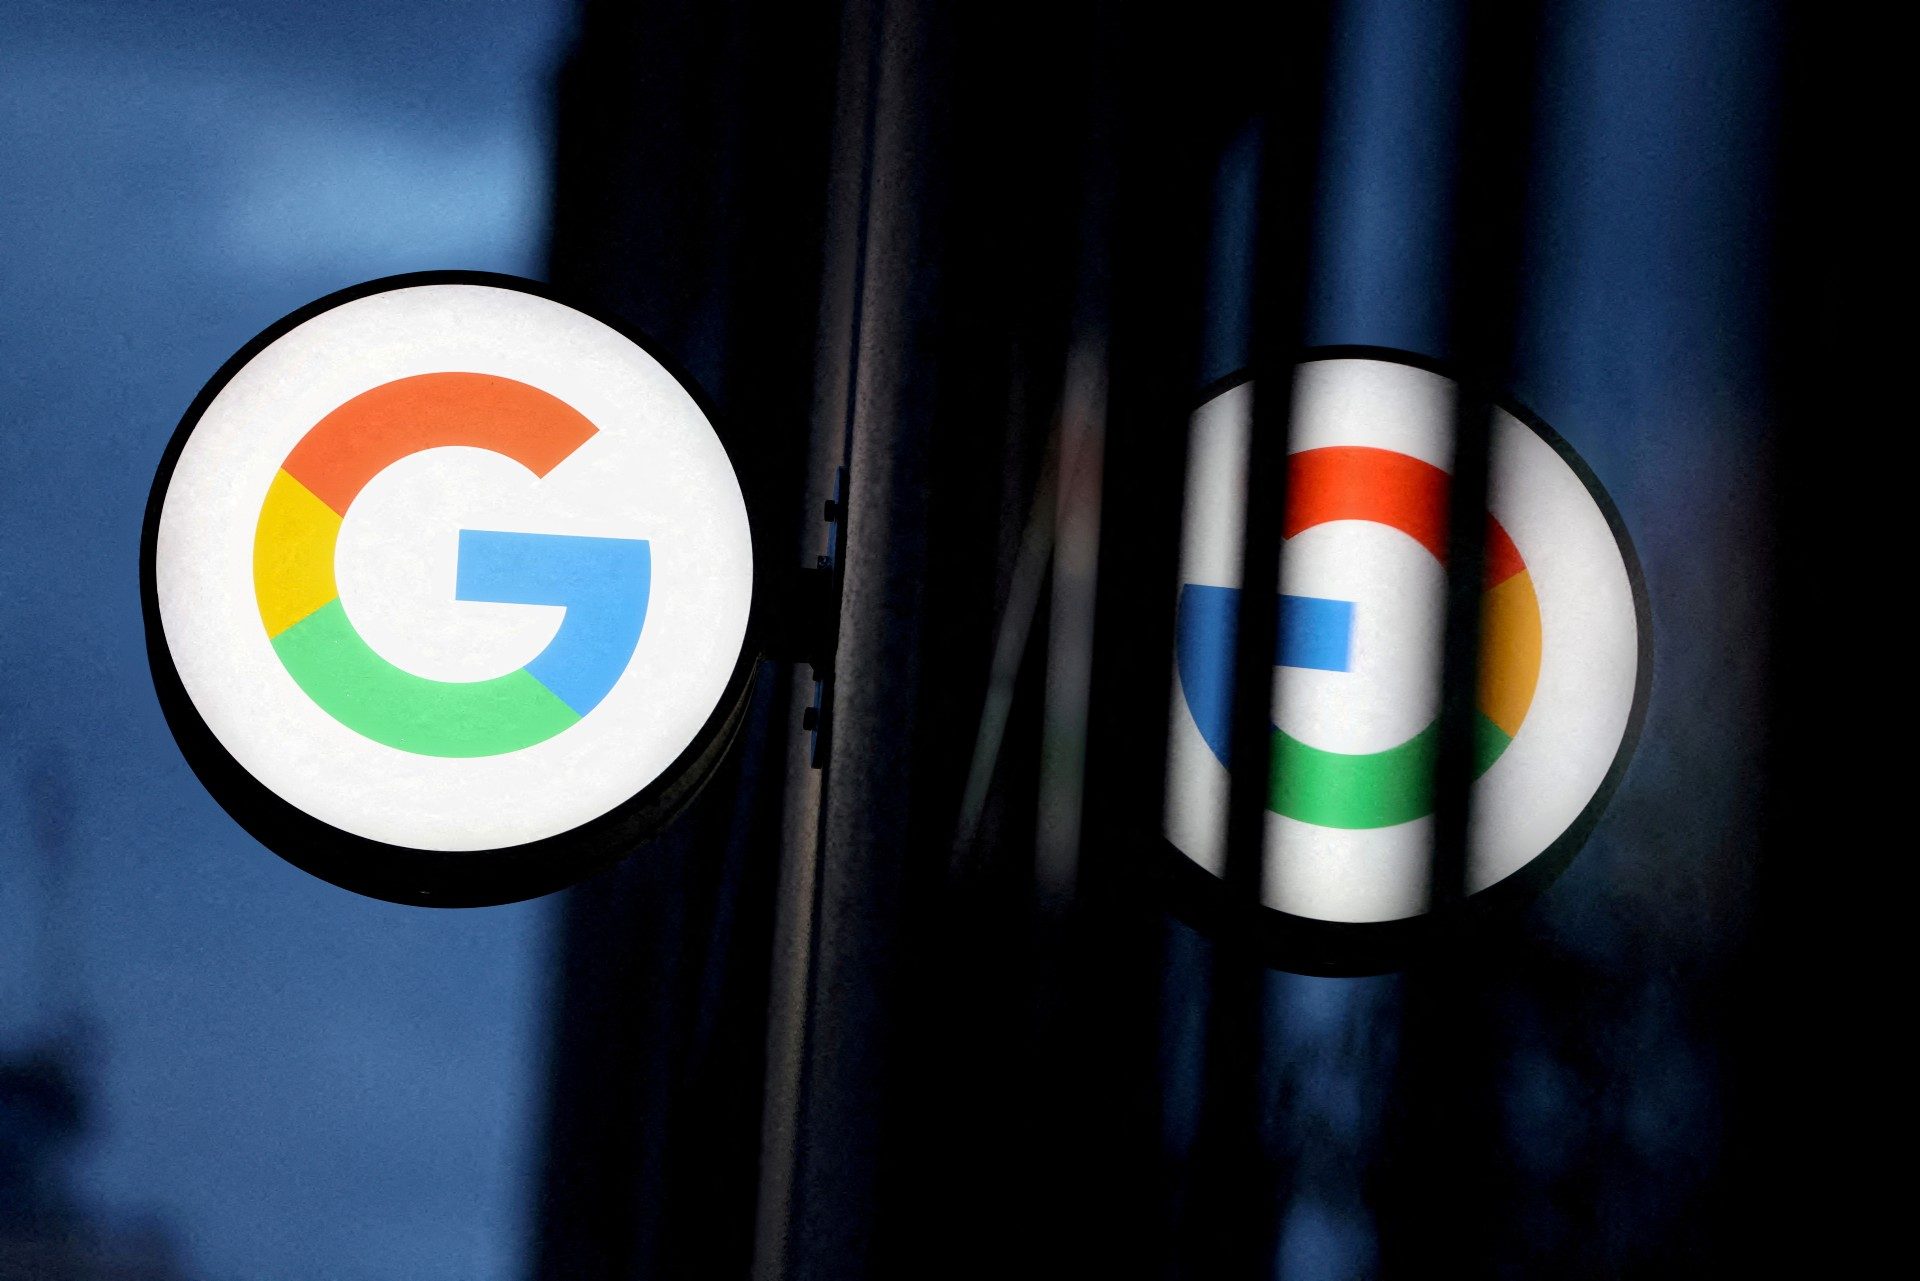 Google faces EU antitrust charges over its adtech business – sources